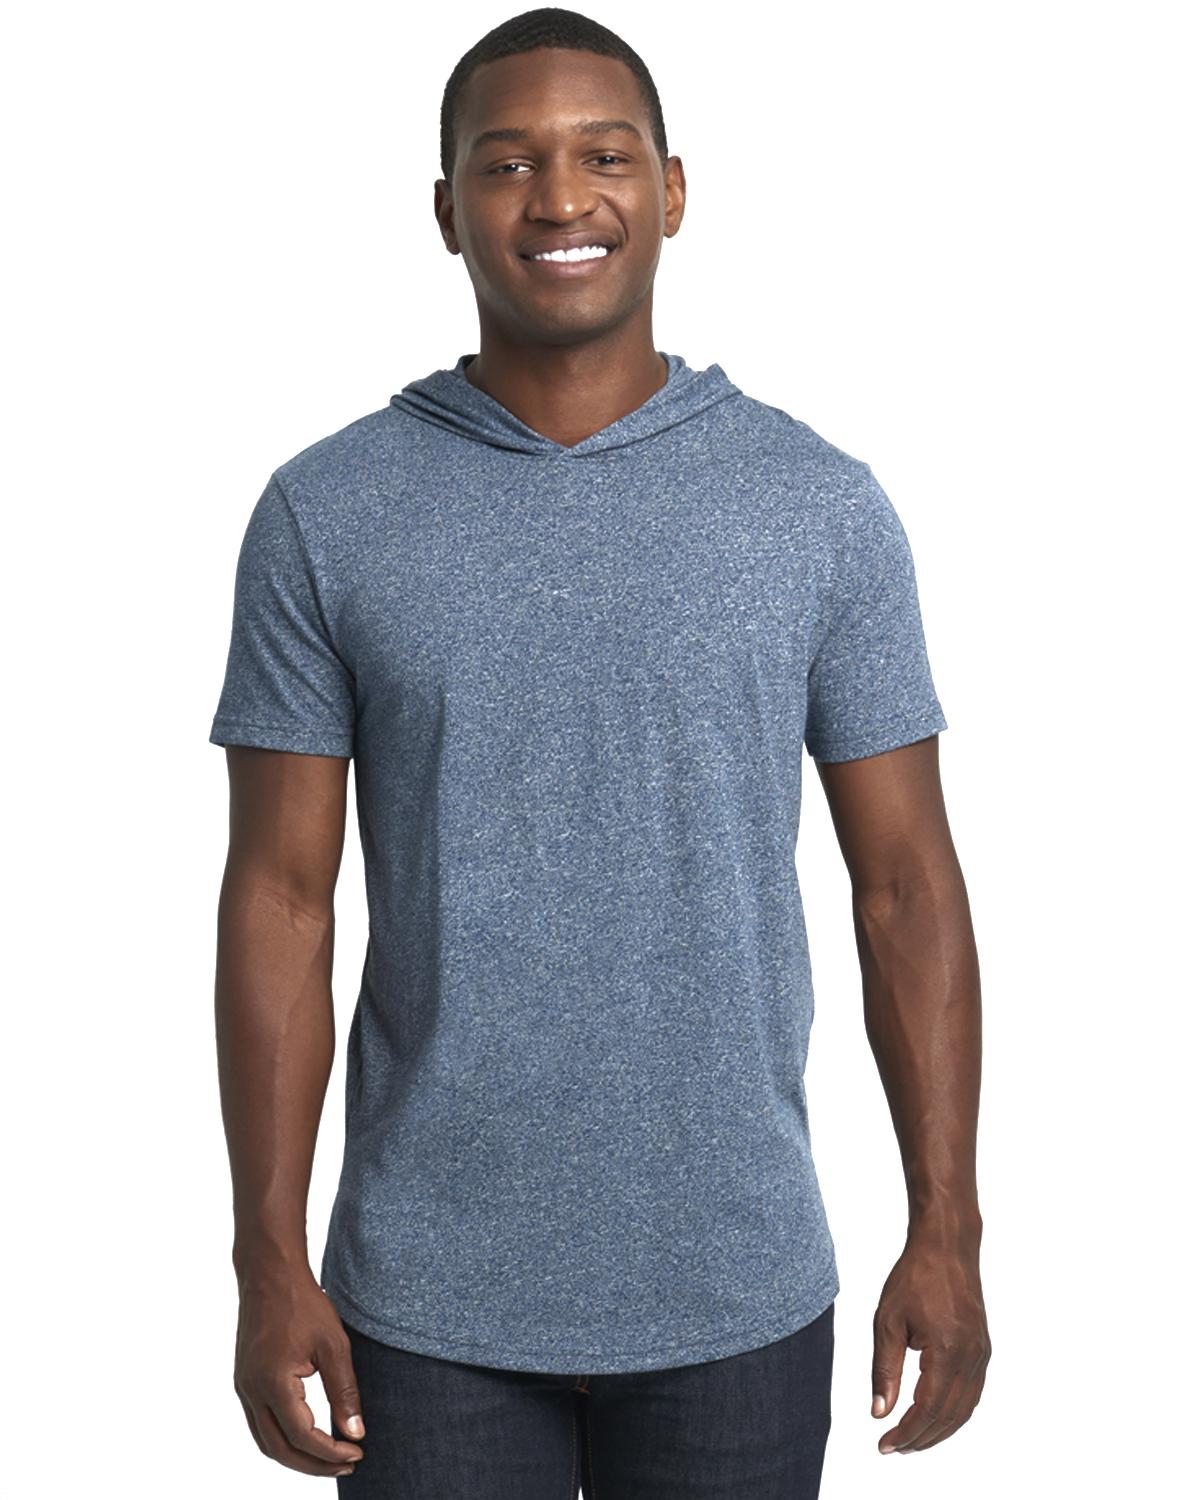 Download Next Level 2022 Unisex Mock Twist Short Sleeve Hoody T-Shirt - Shirtmax